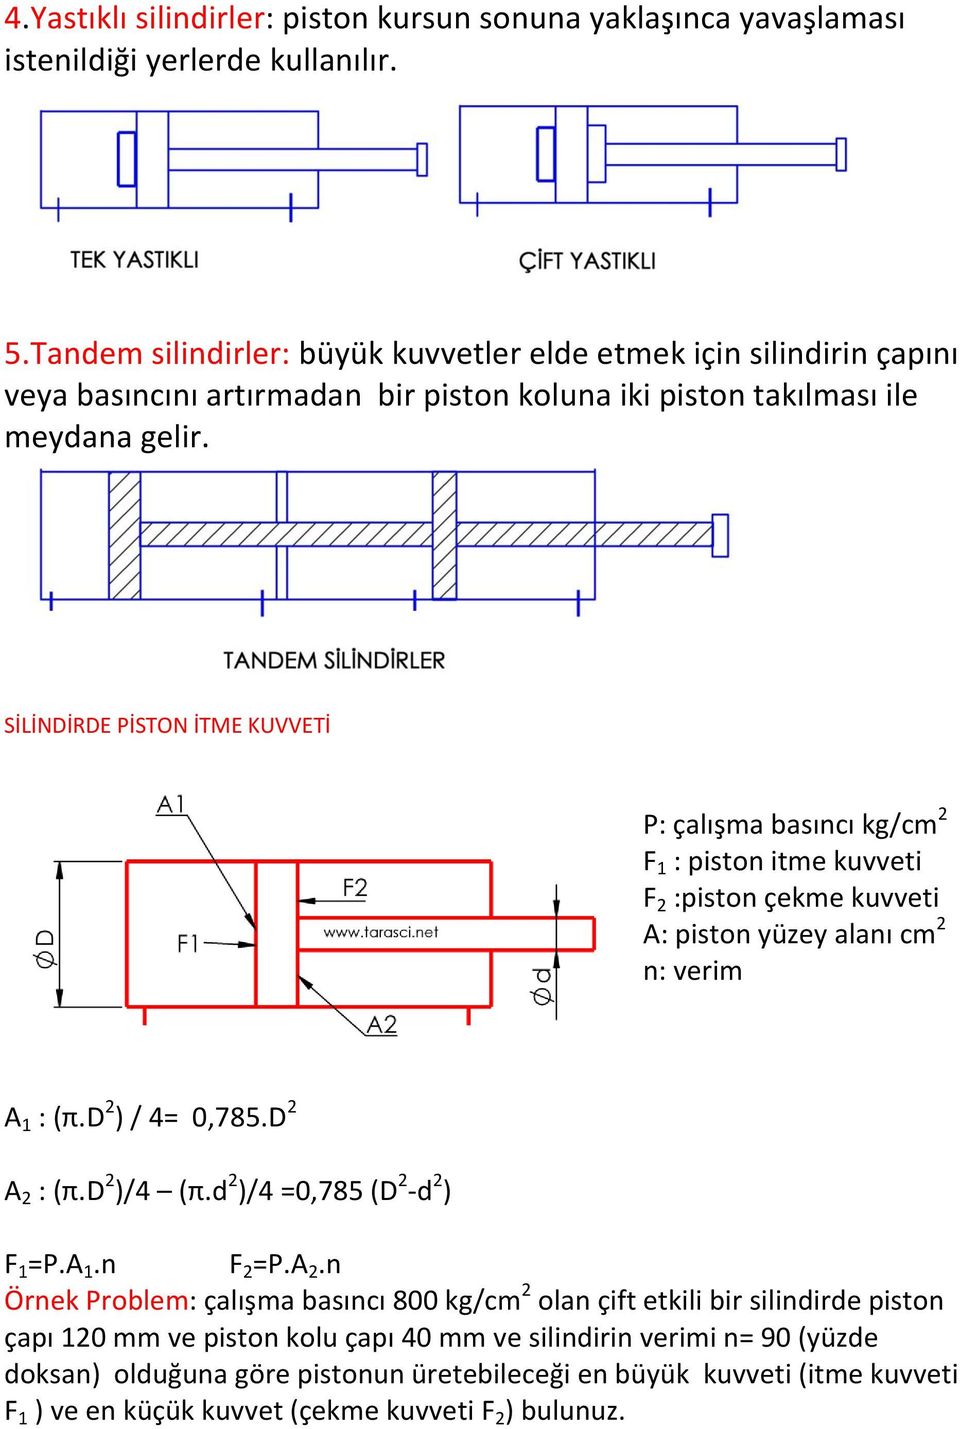 SİLİNDİRDE PİSTON İTME KUVVETİ P: çalışma basıncı kg/cm 2 F 1 : piston itme kuvveti F 2 :piston çekme kuvveti A: piston yüzey alanı cm 2 n: verim A 1 : (π.d 2 ) / 4= 0,785.D 2 A 2 : (π.d 2 )/4 (π.